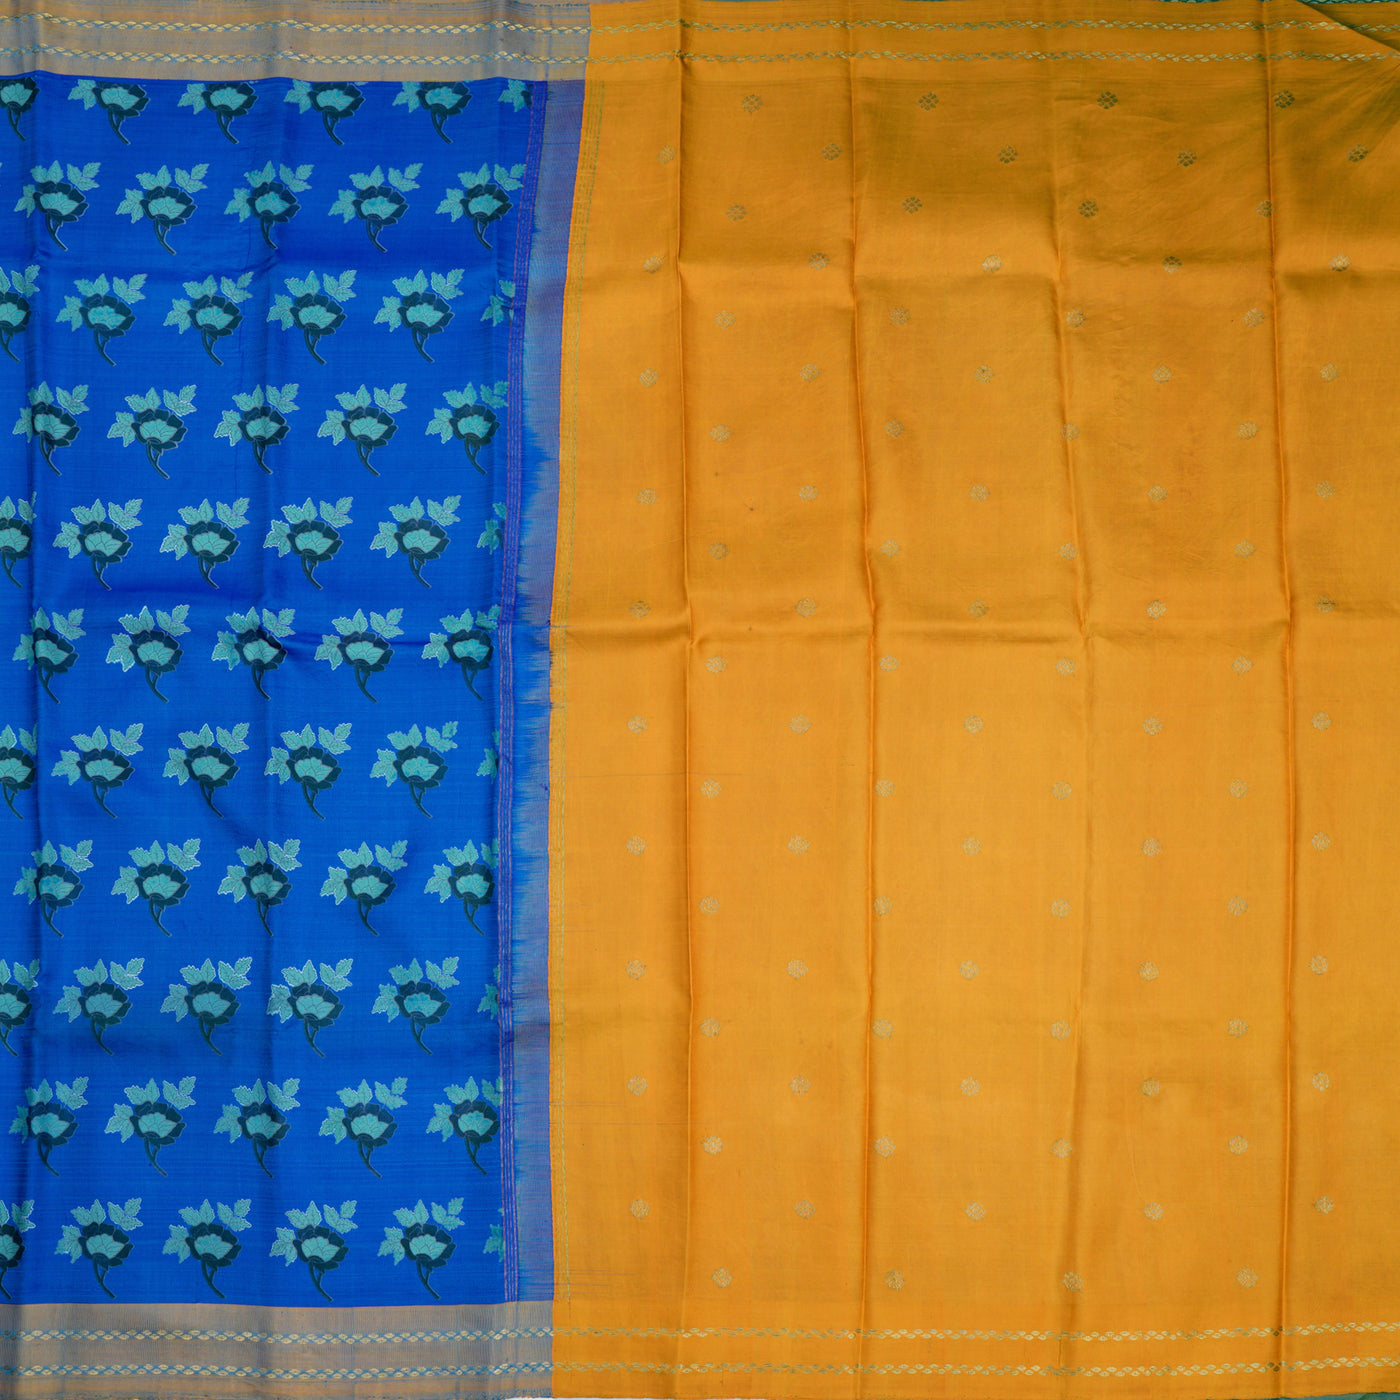 Blue Printed Kanchi Silk Saree with Flower Printed Design